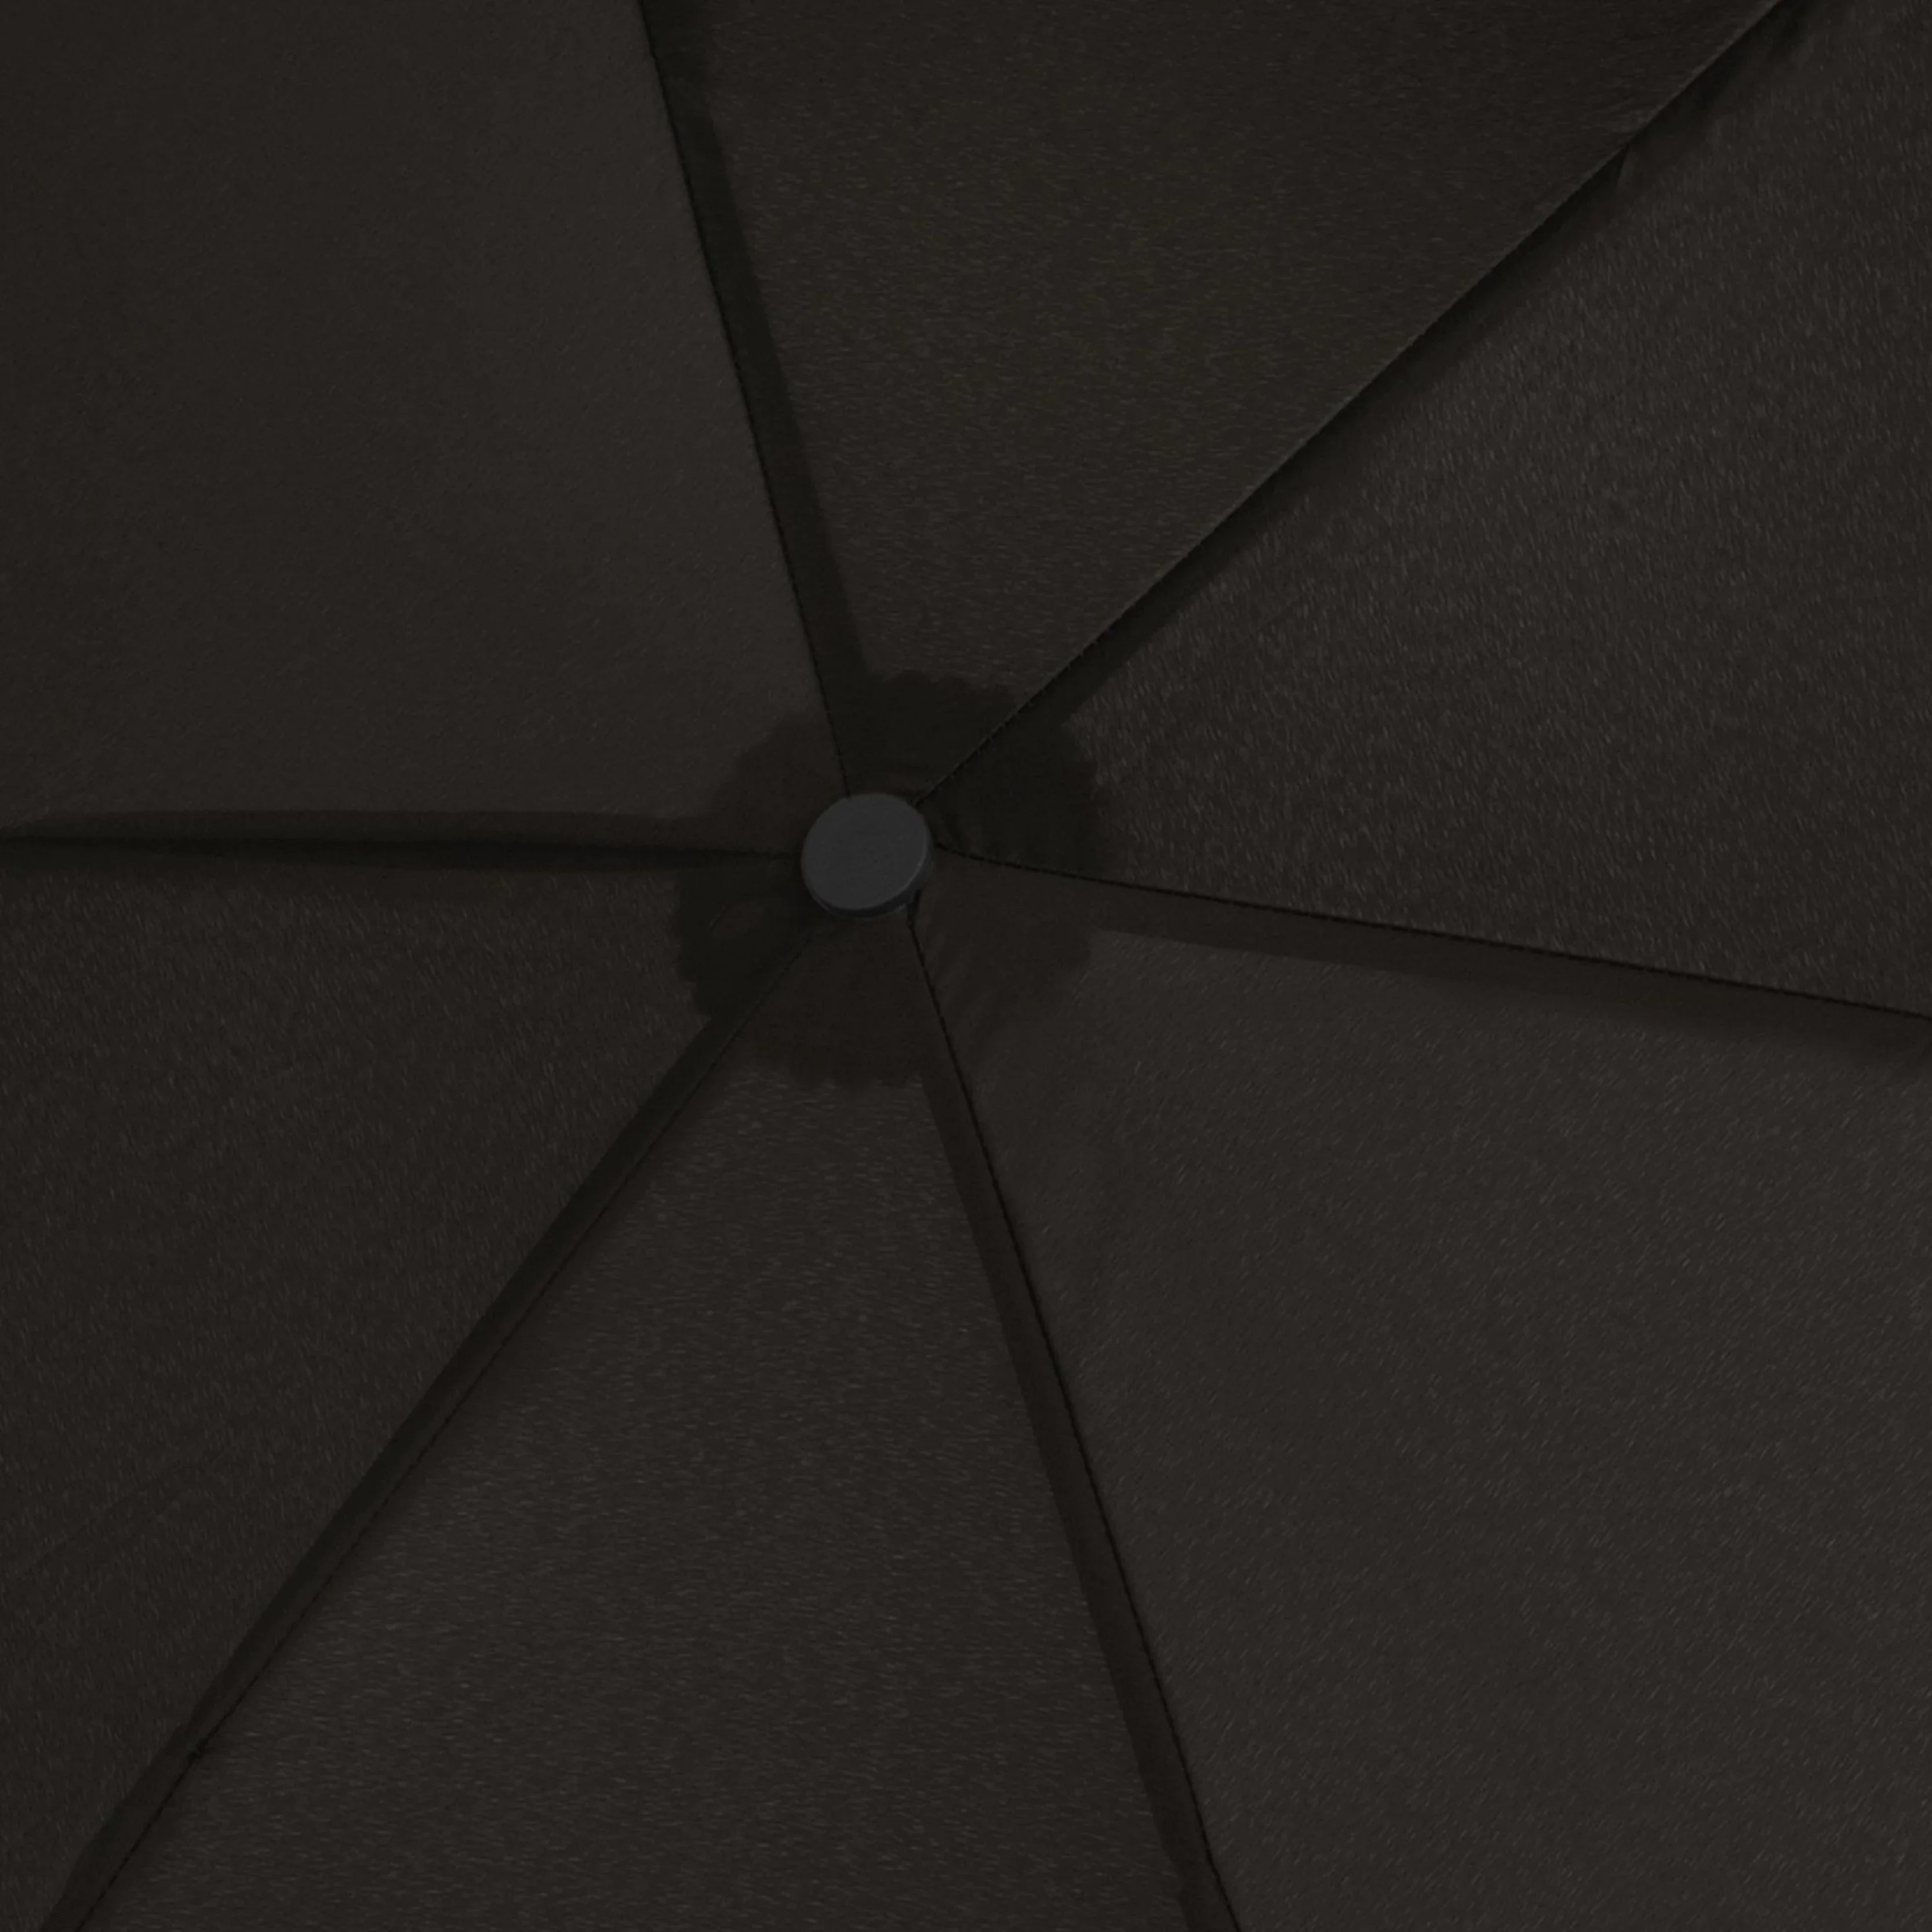 Doppler pocket umbrellas Zero Magic - red